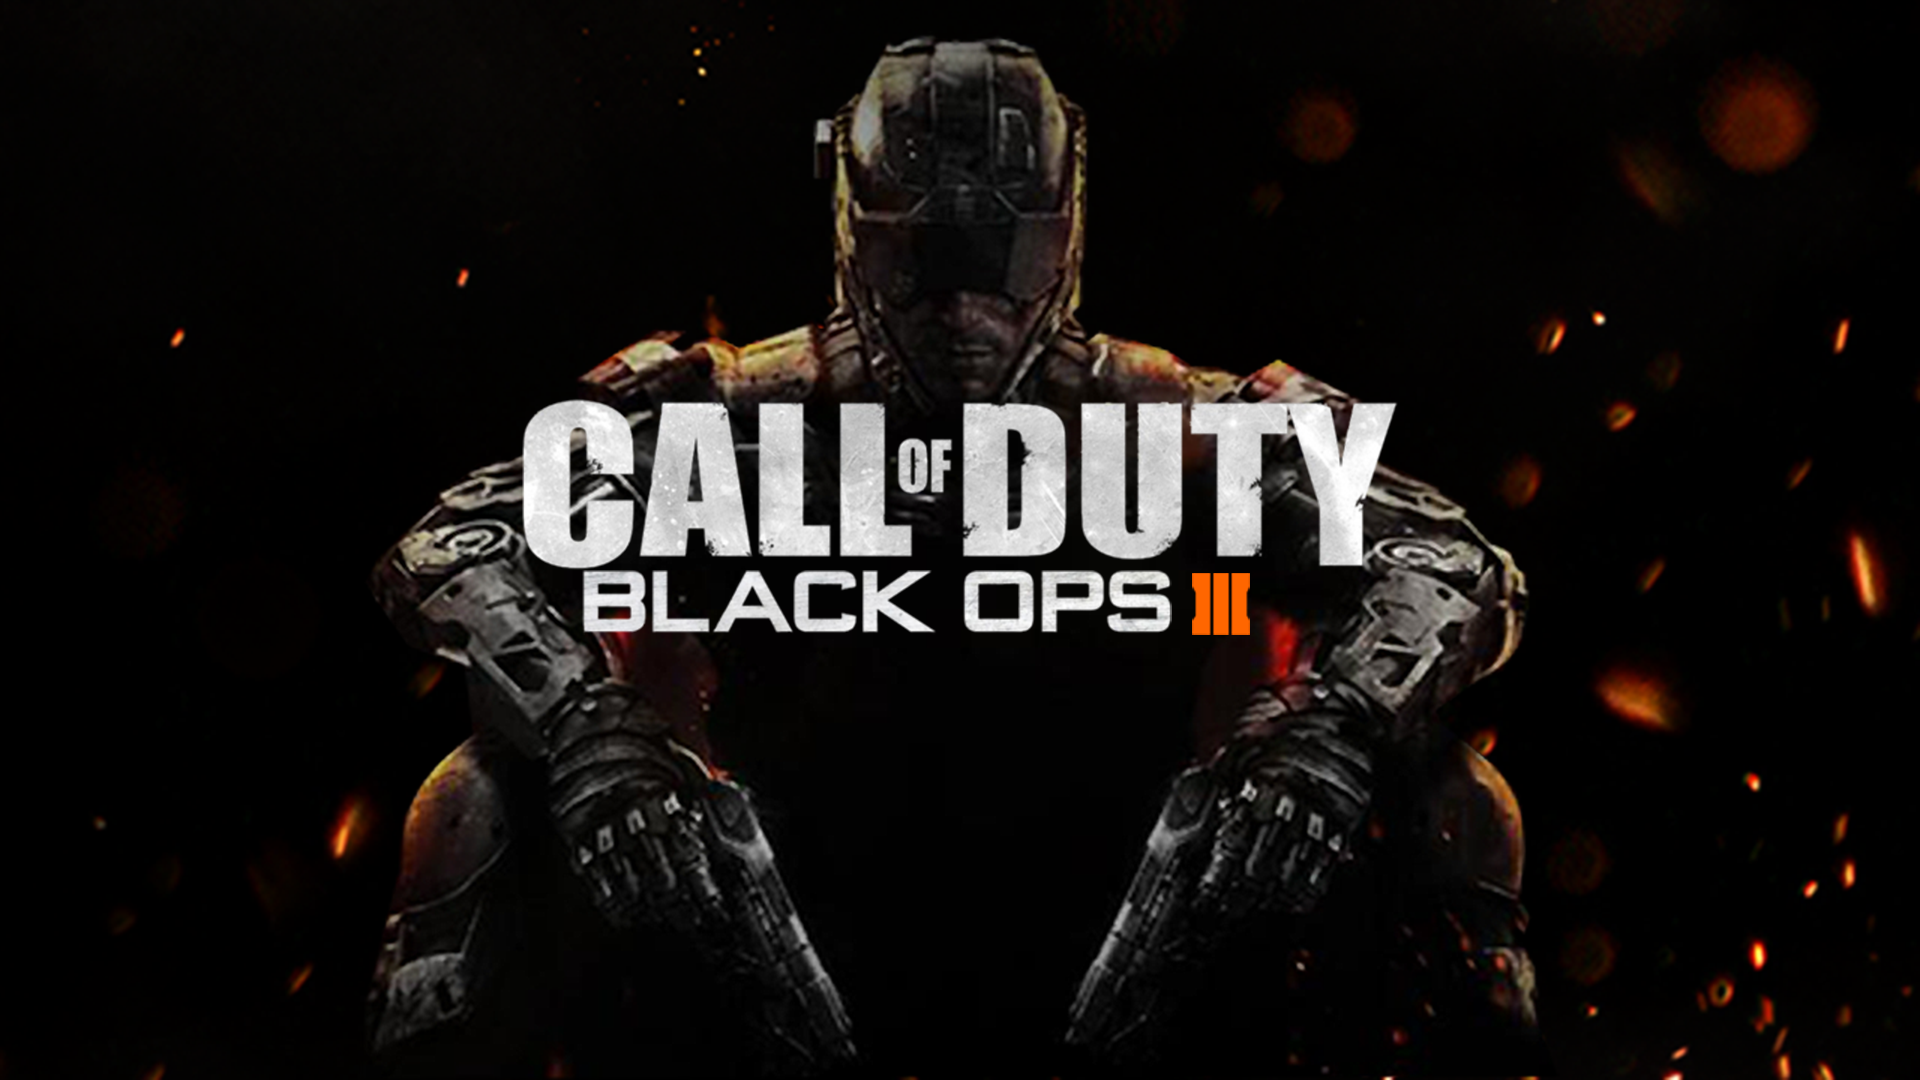 Wallpaper of Call of Duty Black Op 3